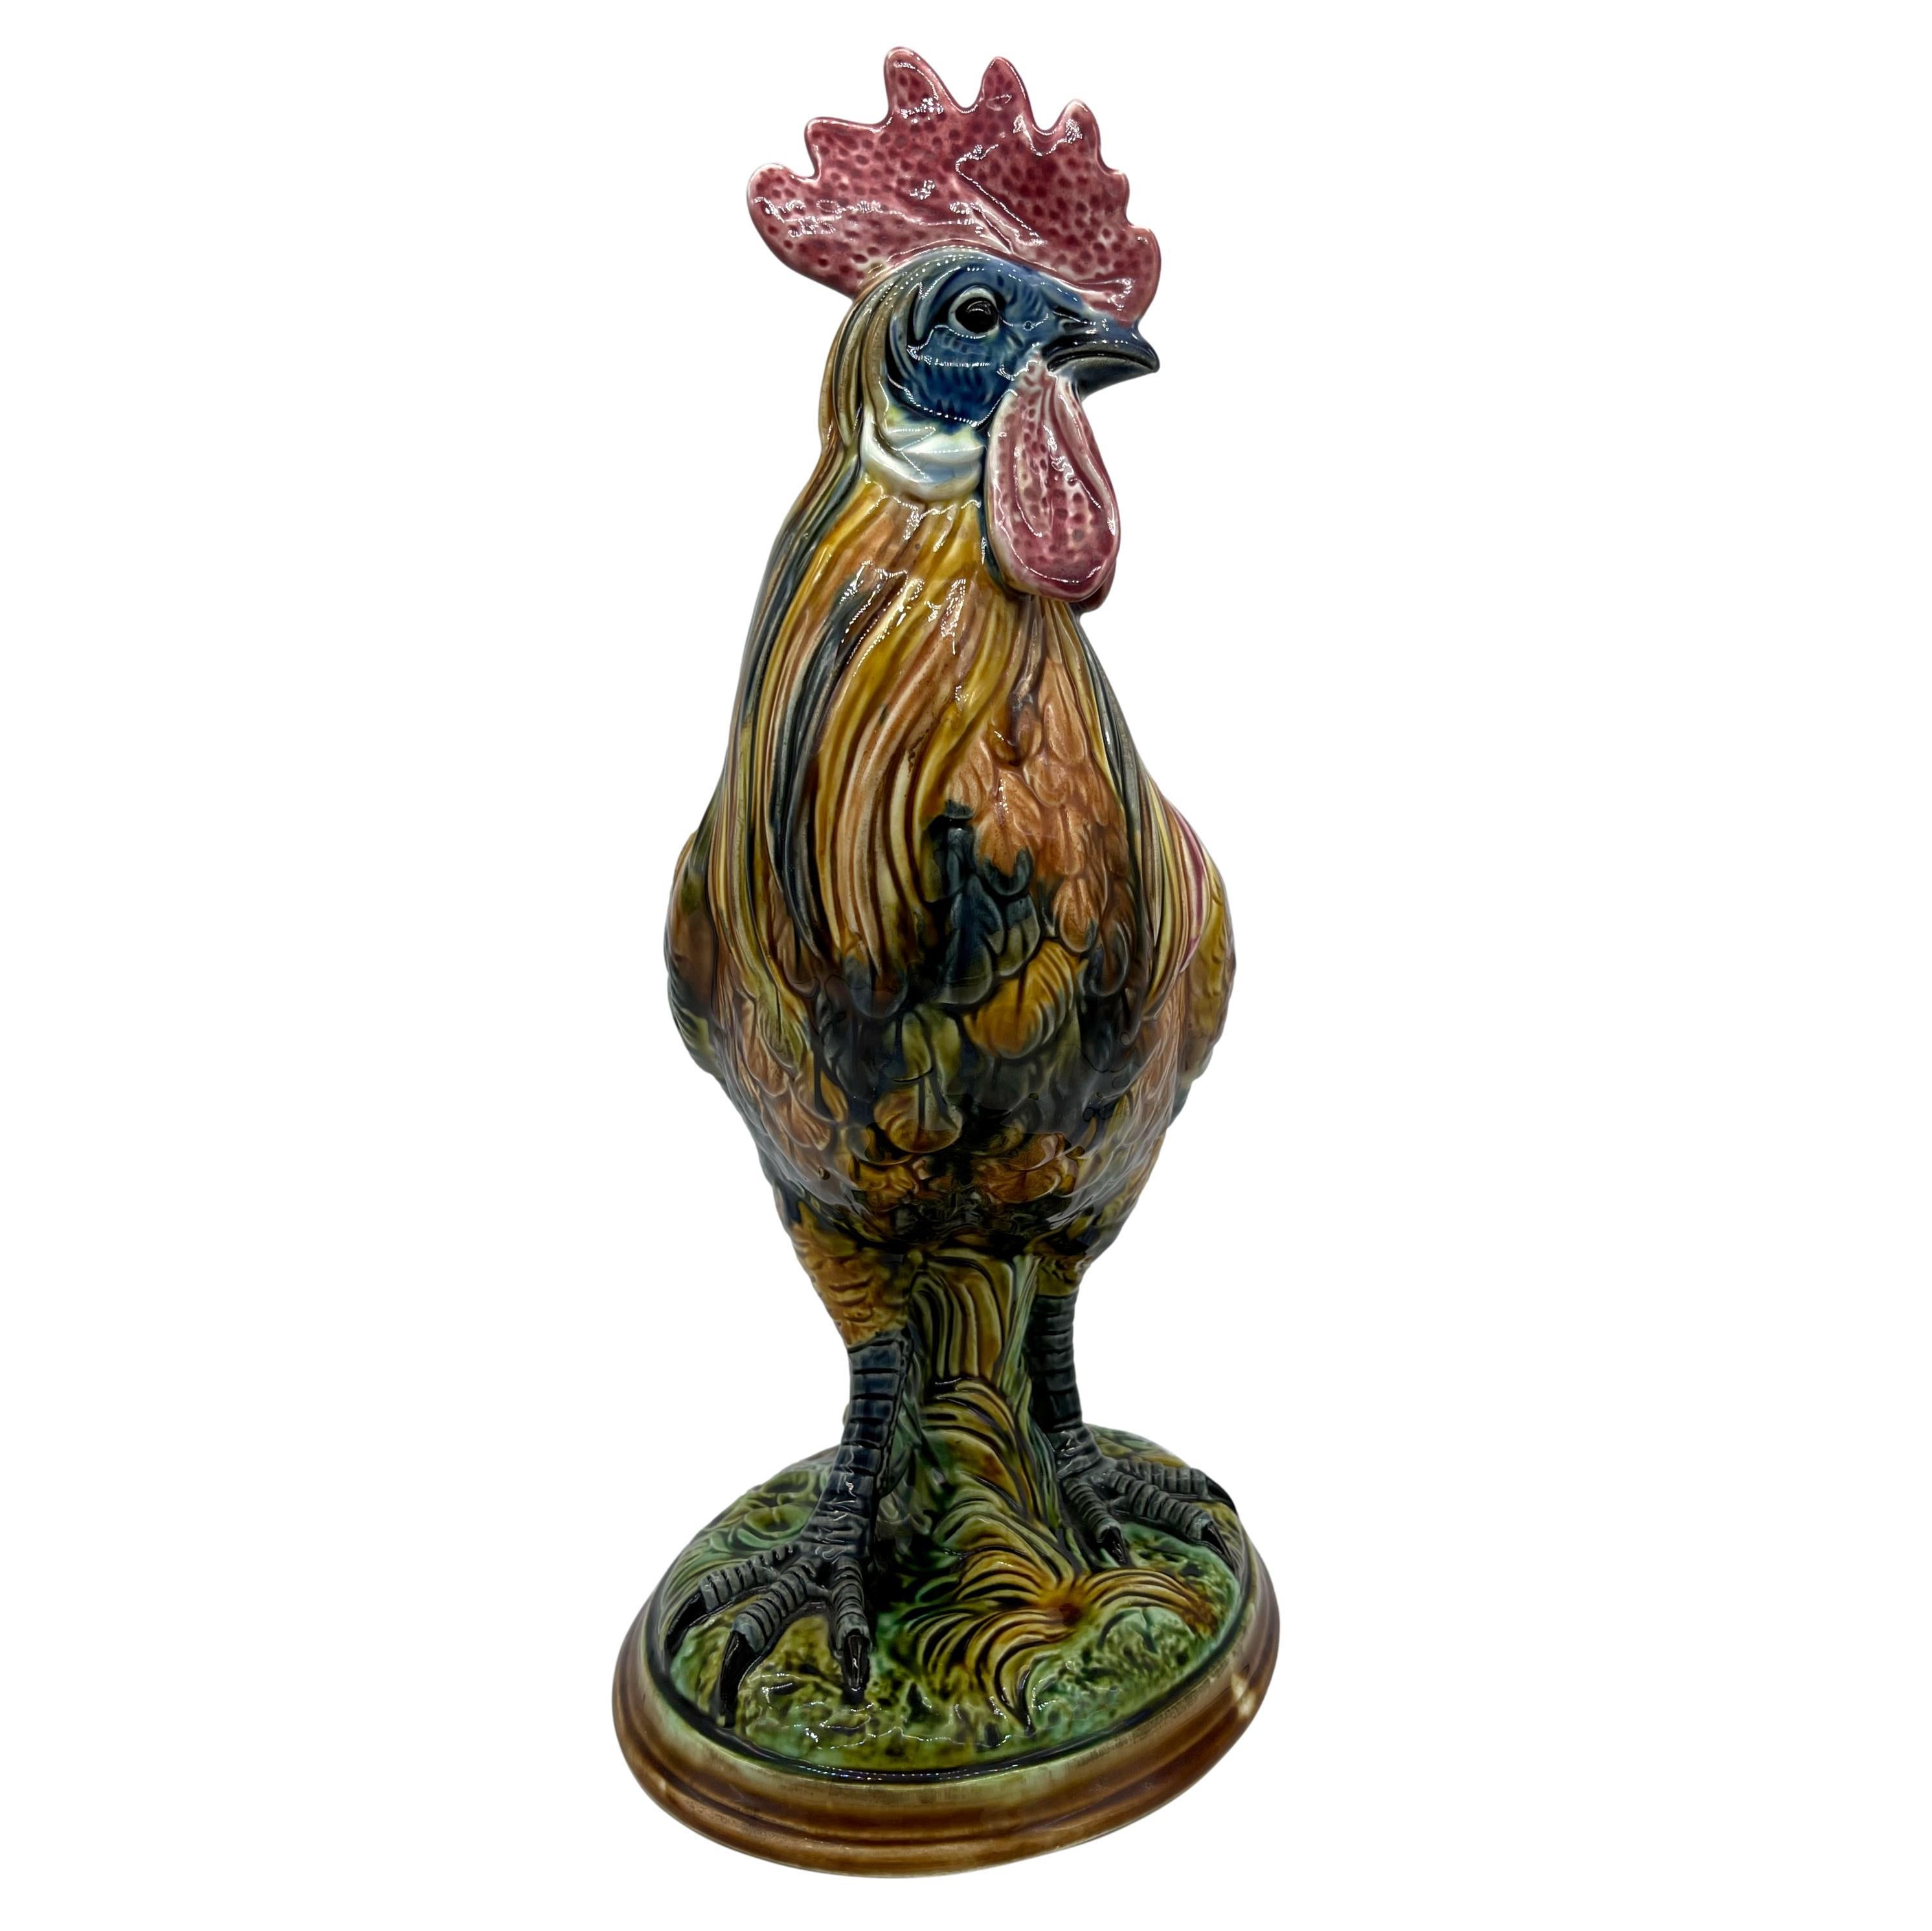 Allemand Coq figuratif en majolique allemande de Riedel Von Riedelstein, Dallwitz, vers 1885 en vente